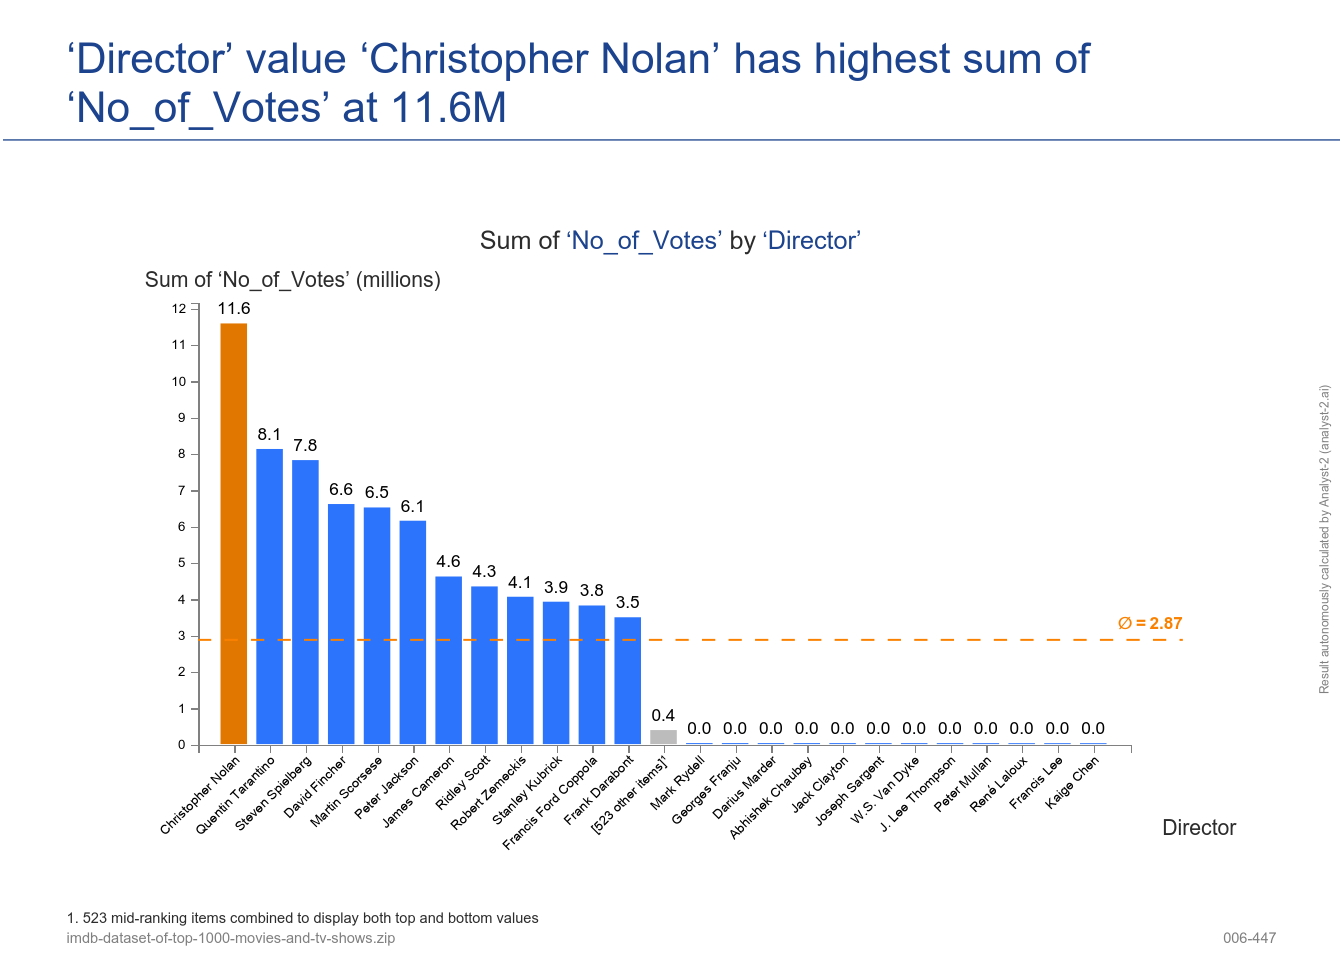 Top 10 Christopher Nolan Films By IMDB Rating